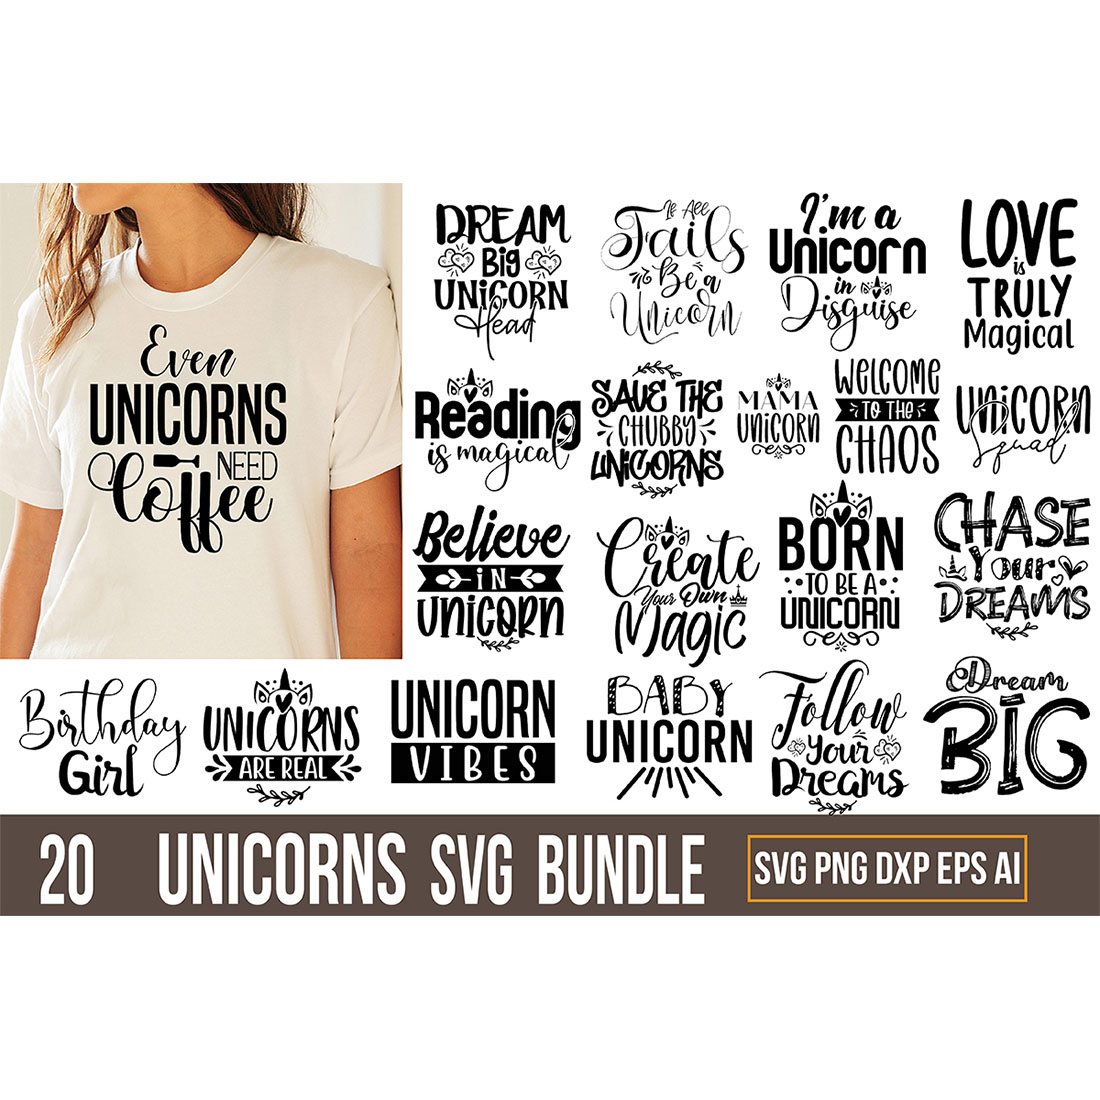 Unicorn Design SVG Bundle cover image.